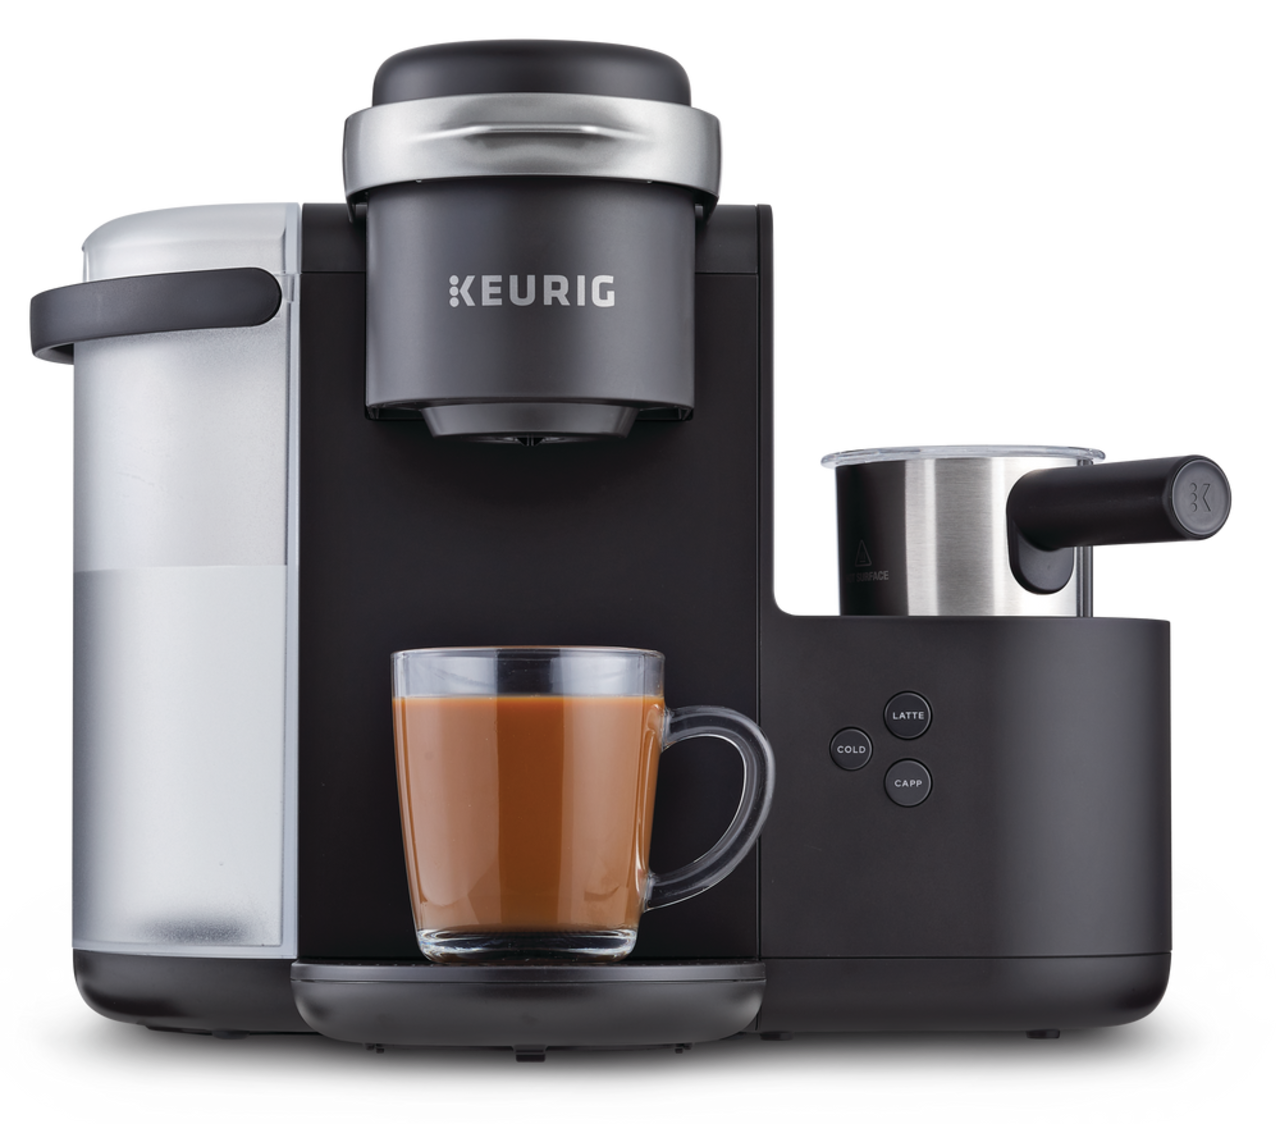  Keurig K-Cafe Single Serve K-Cup Coffee, Latte and